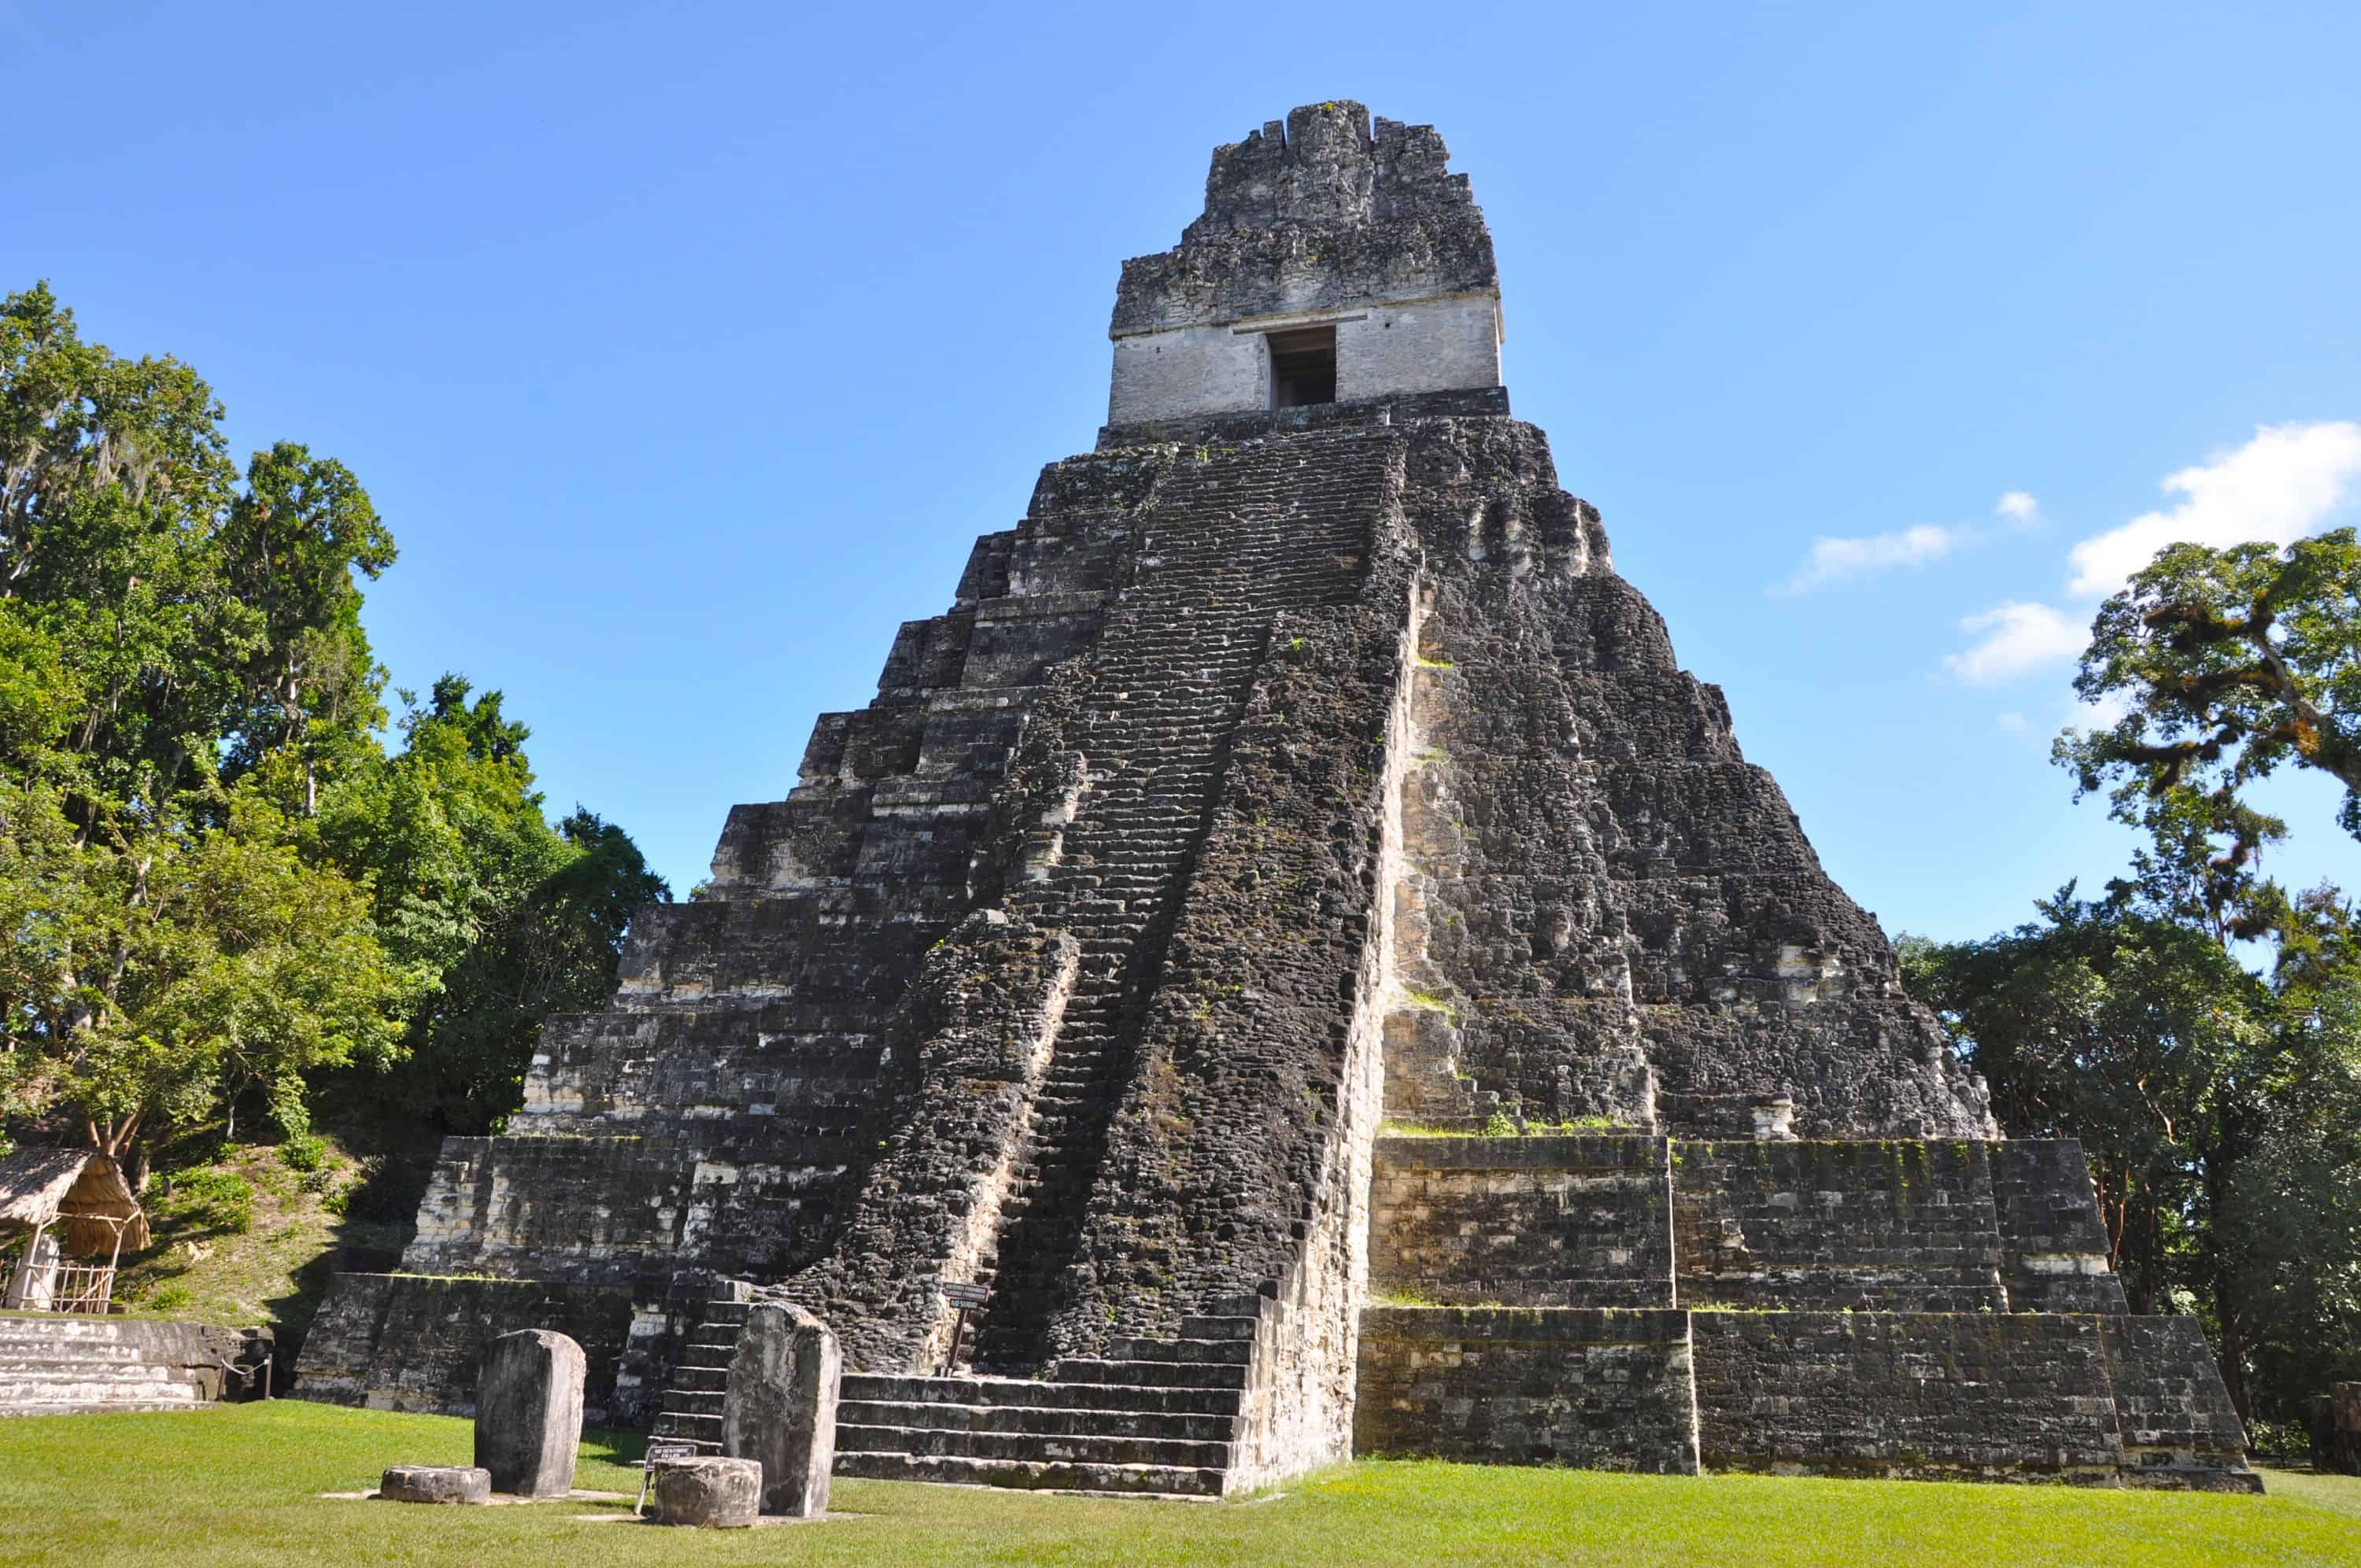 The Maya temple of Tikal in Guatemala